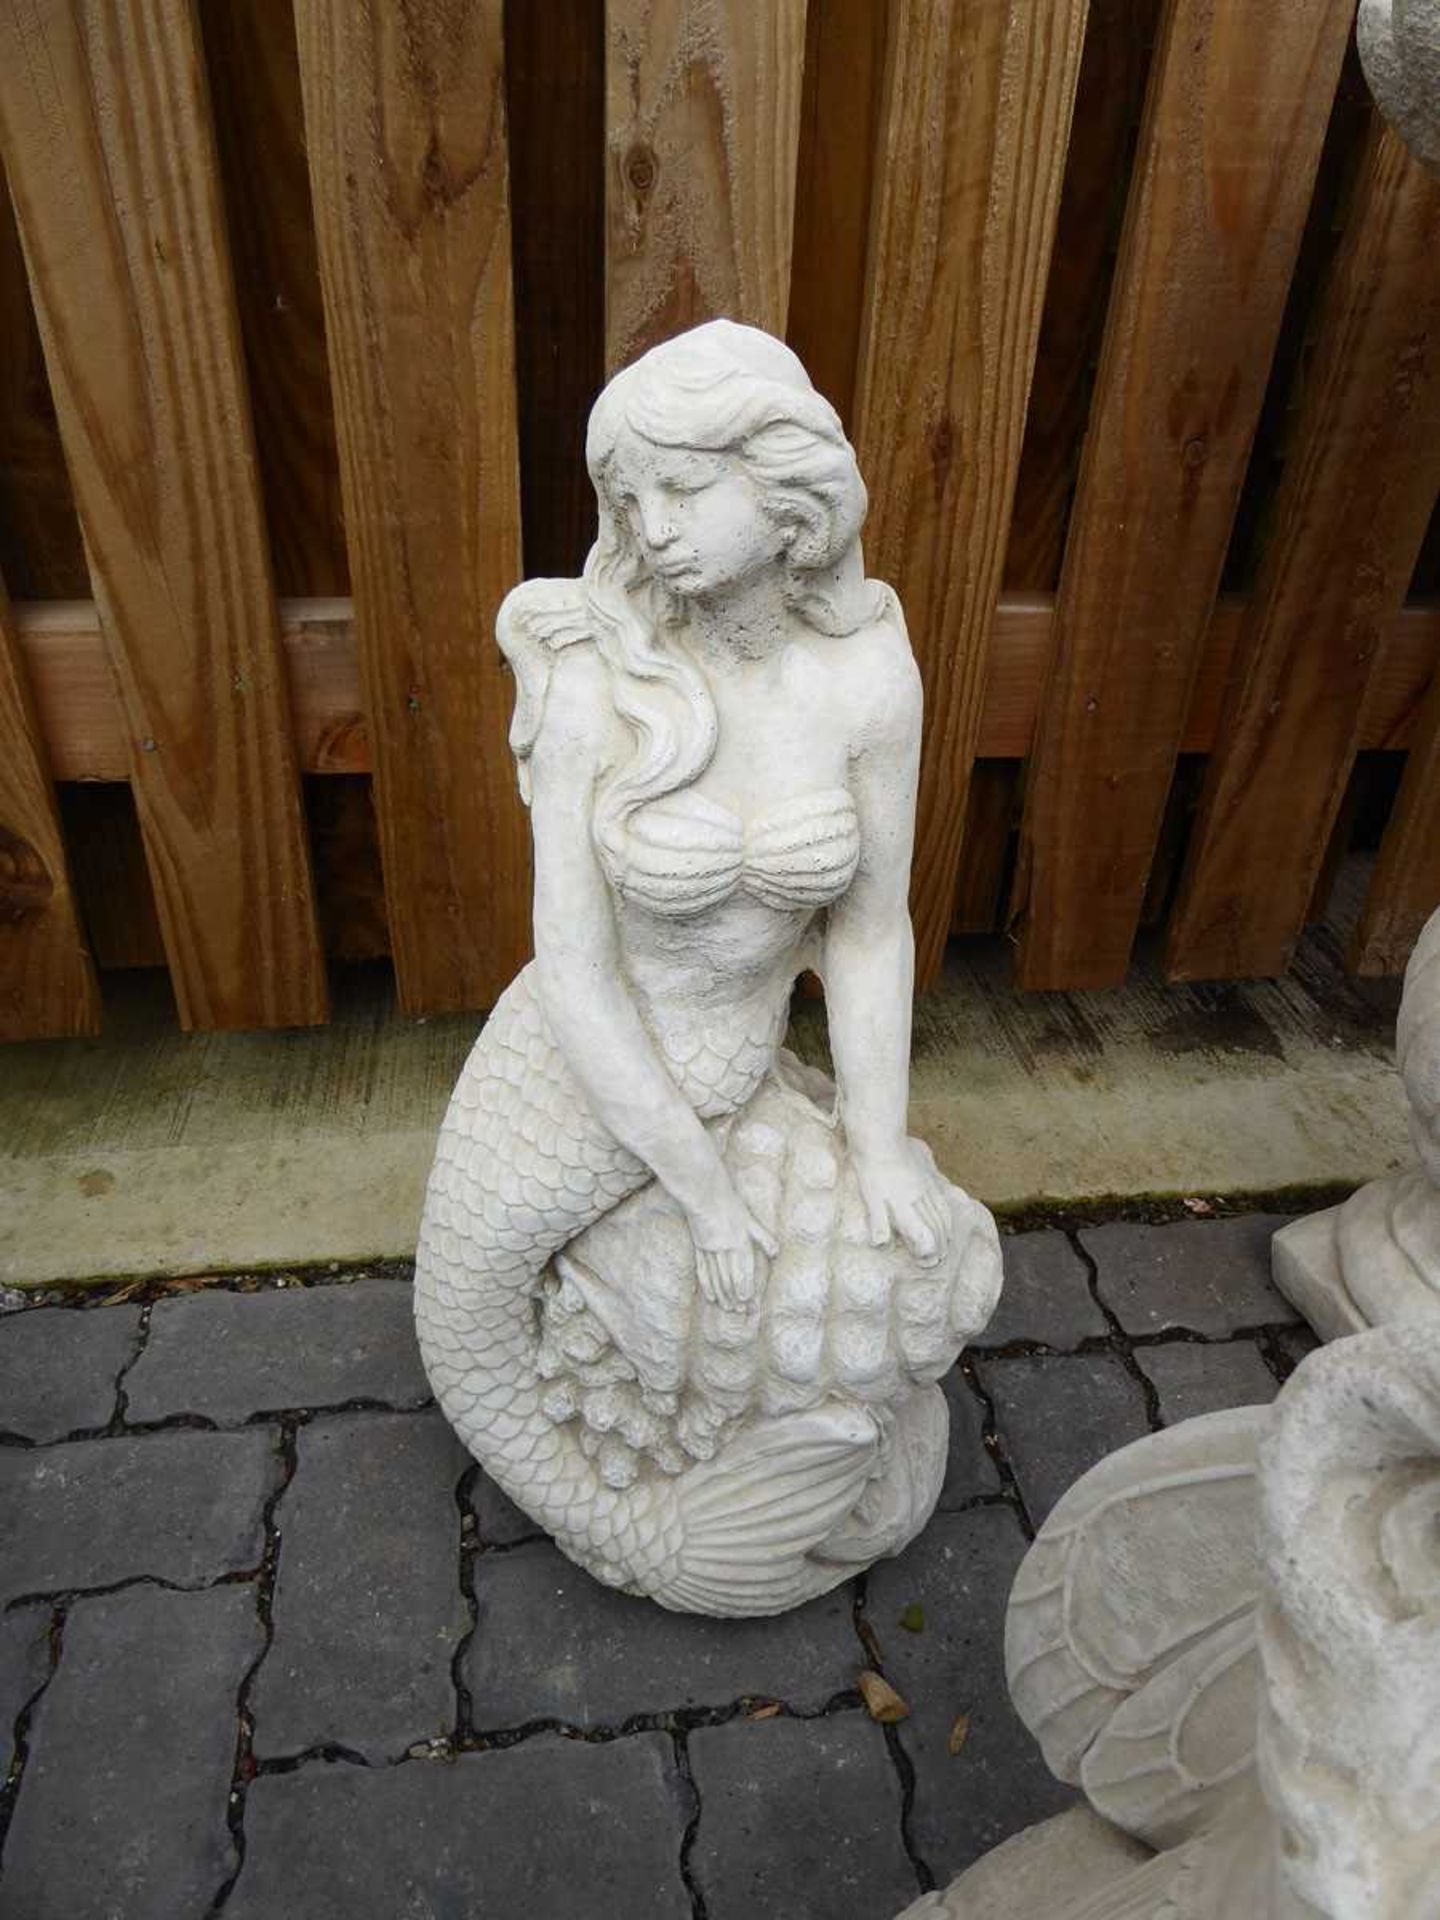 Concrete mermaid